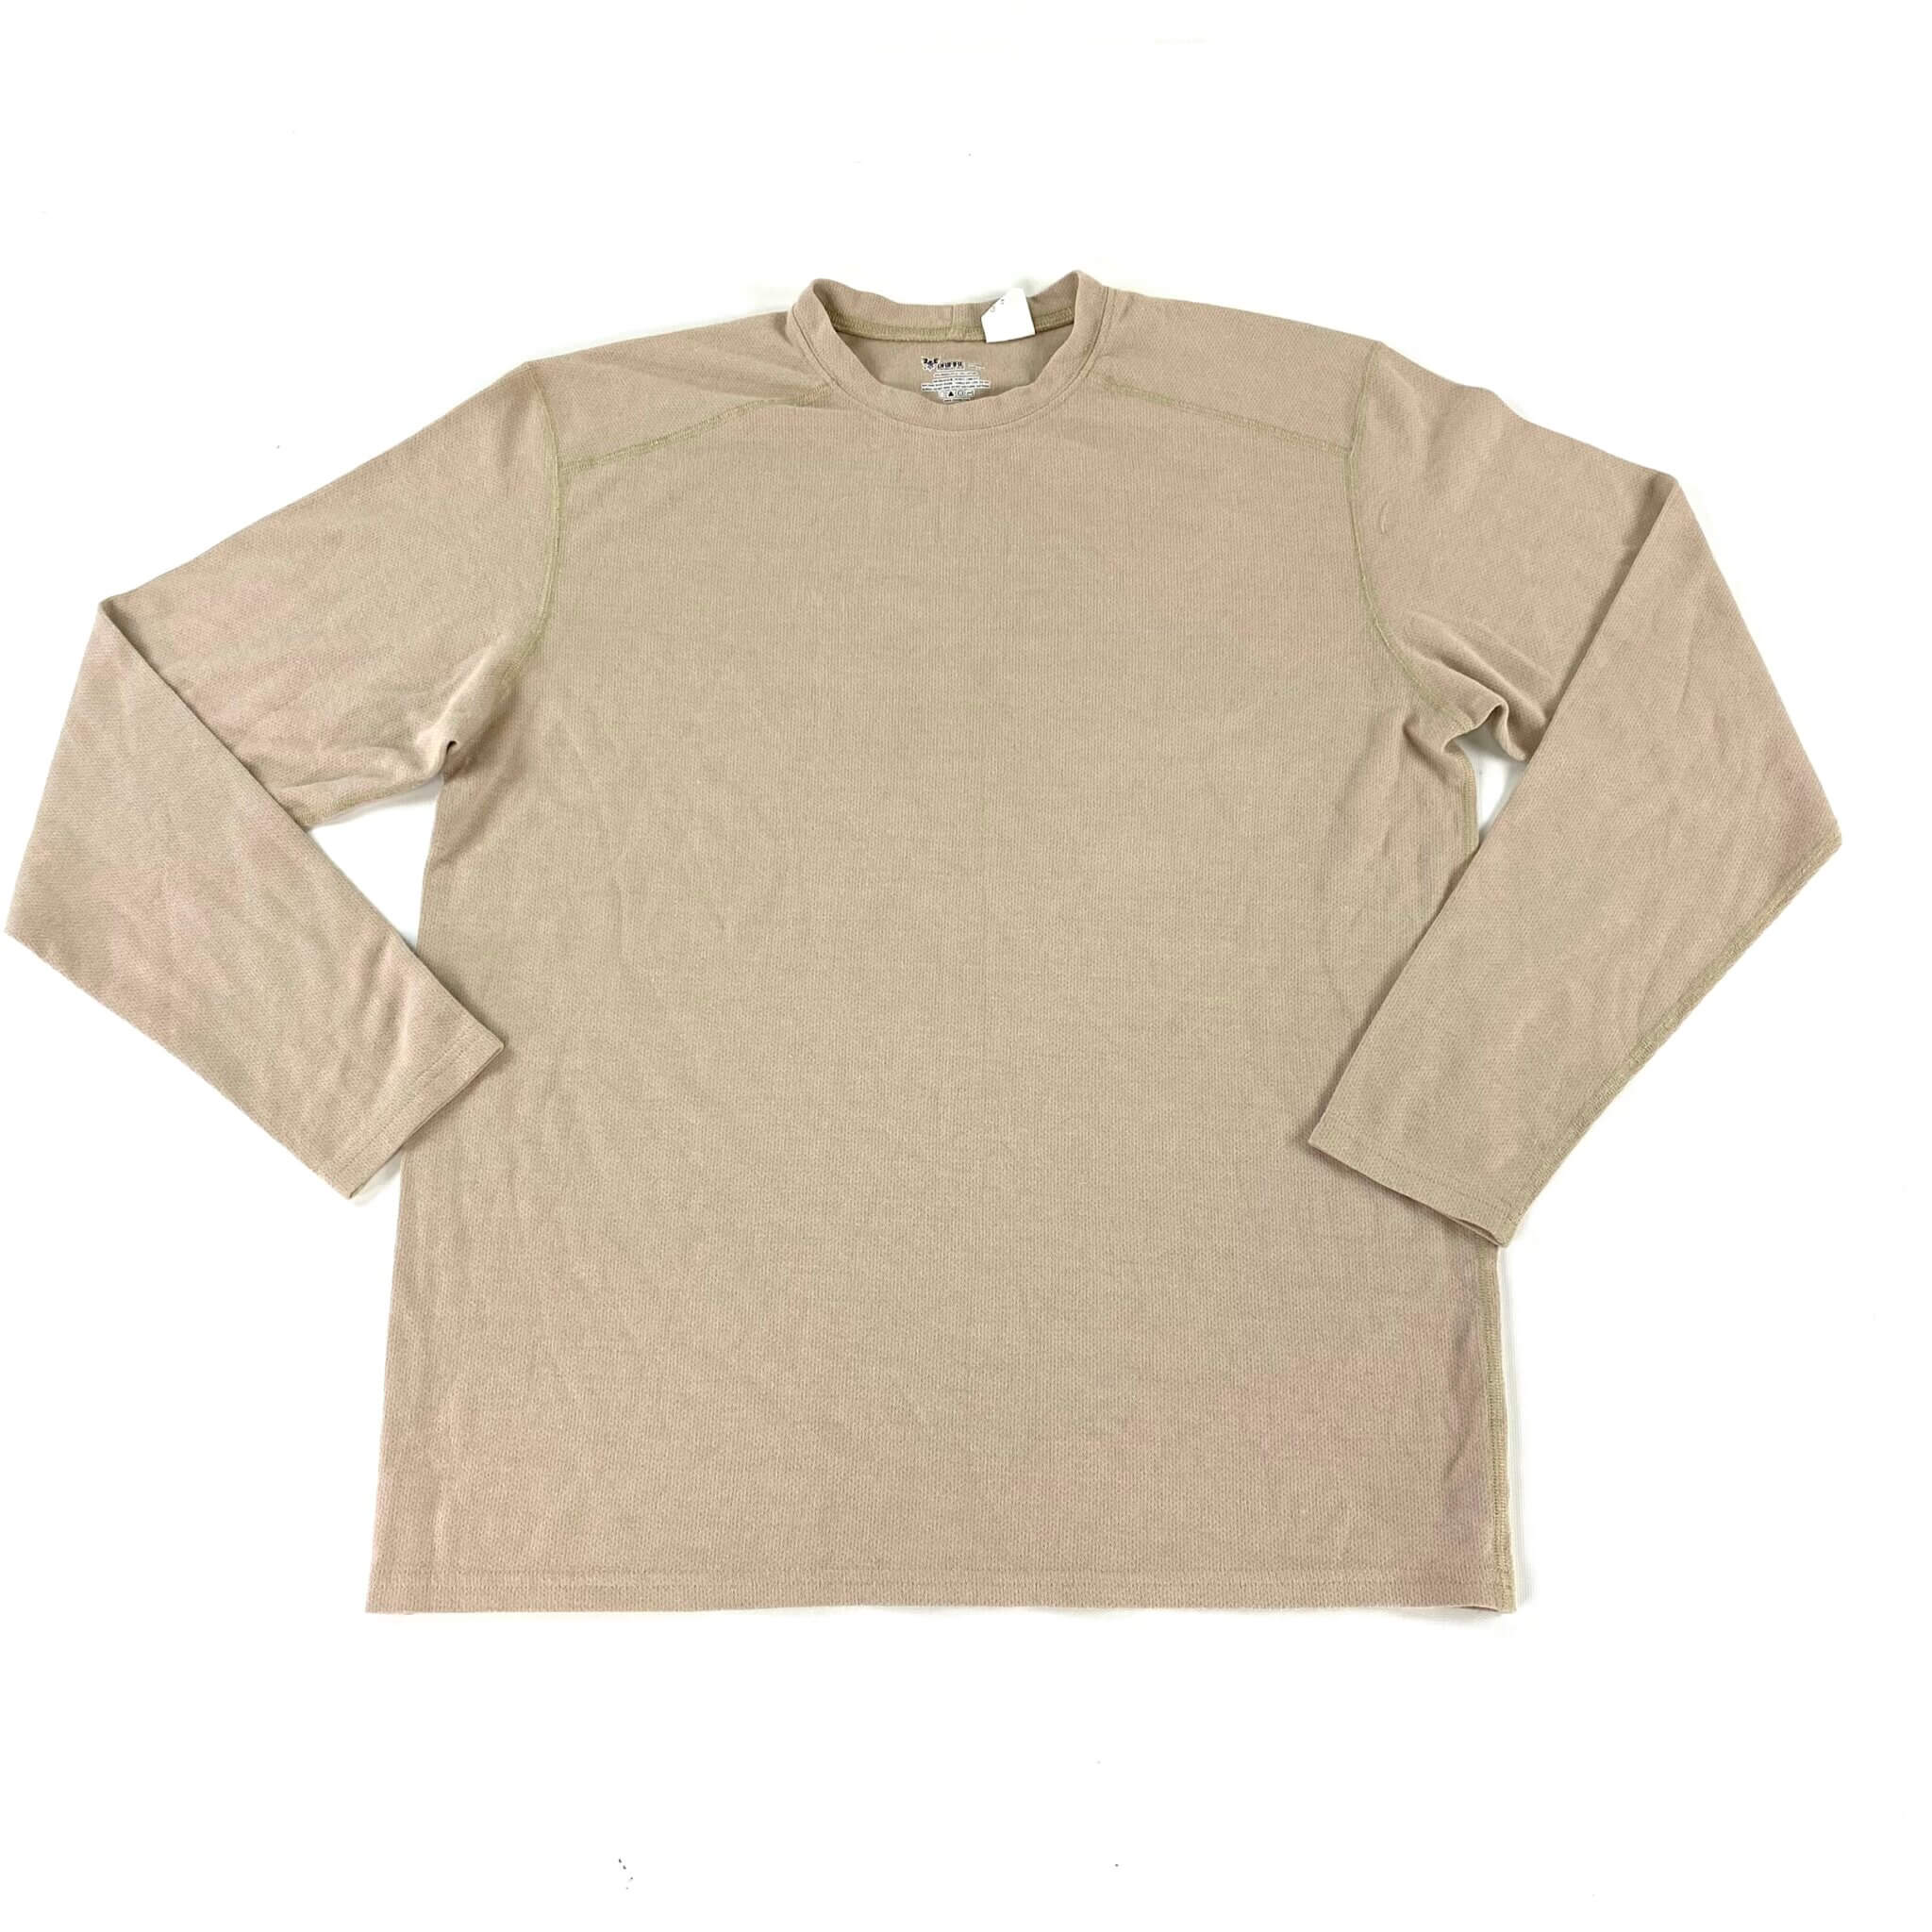 Drifire FR Heavyweight Long Sleeve Shirt, Tan - Venture Surplus